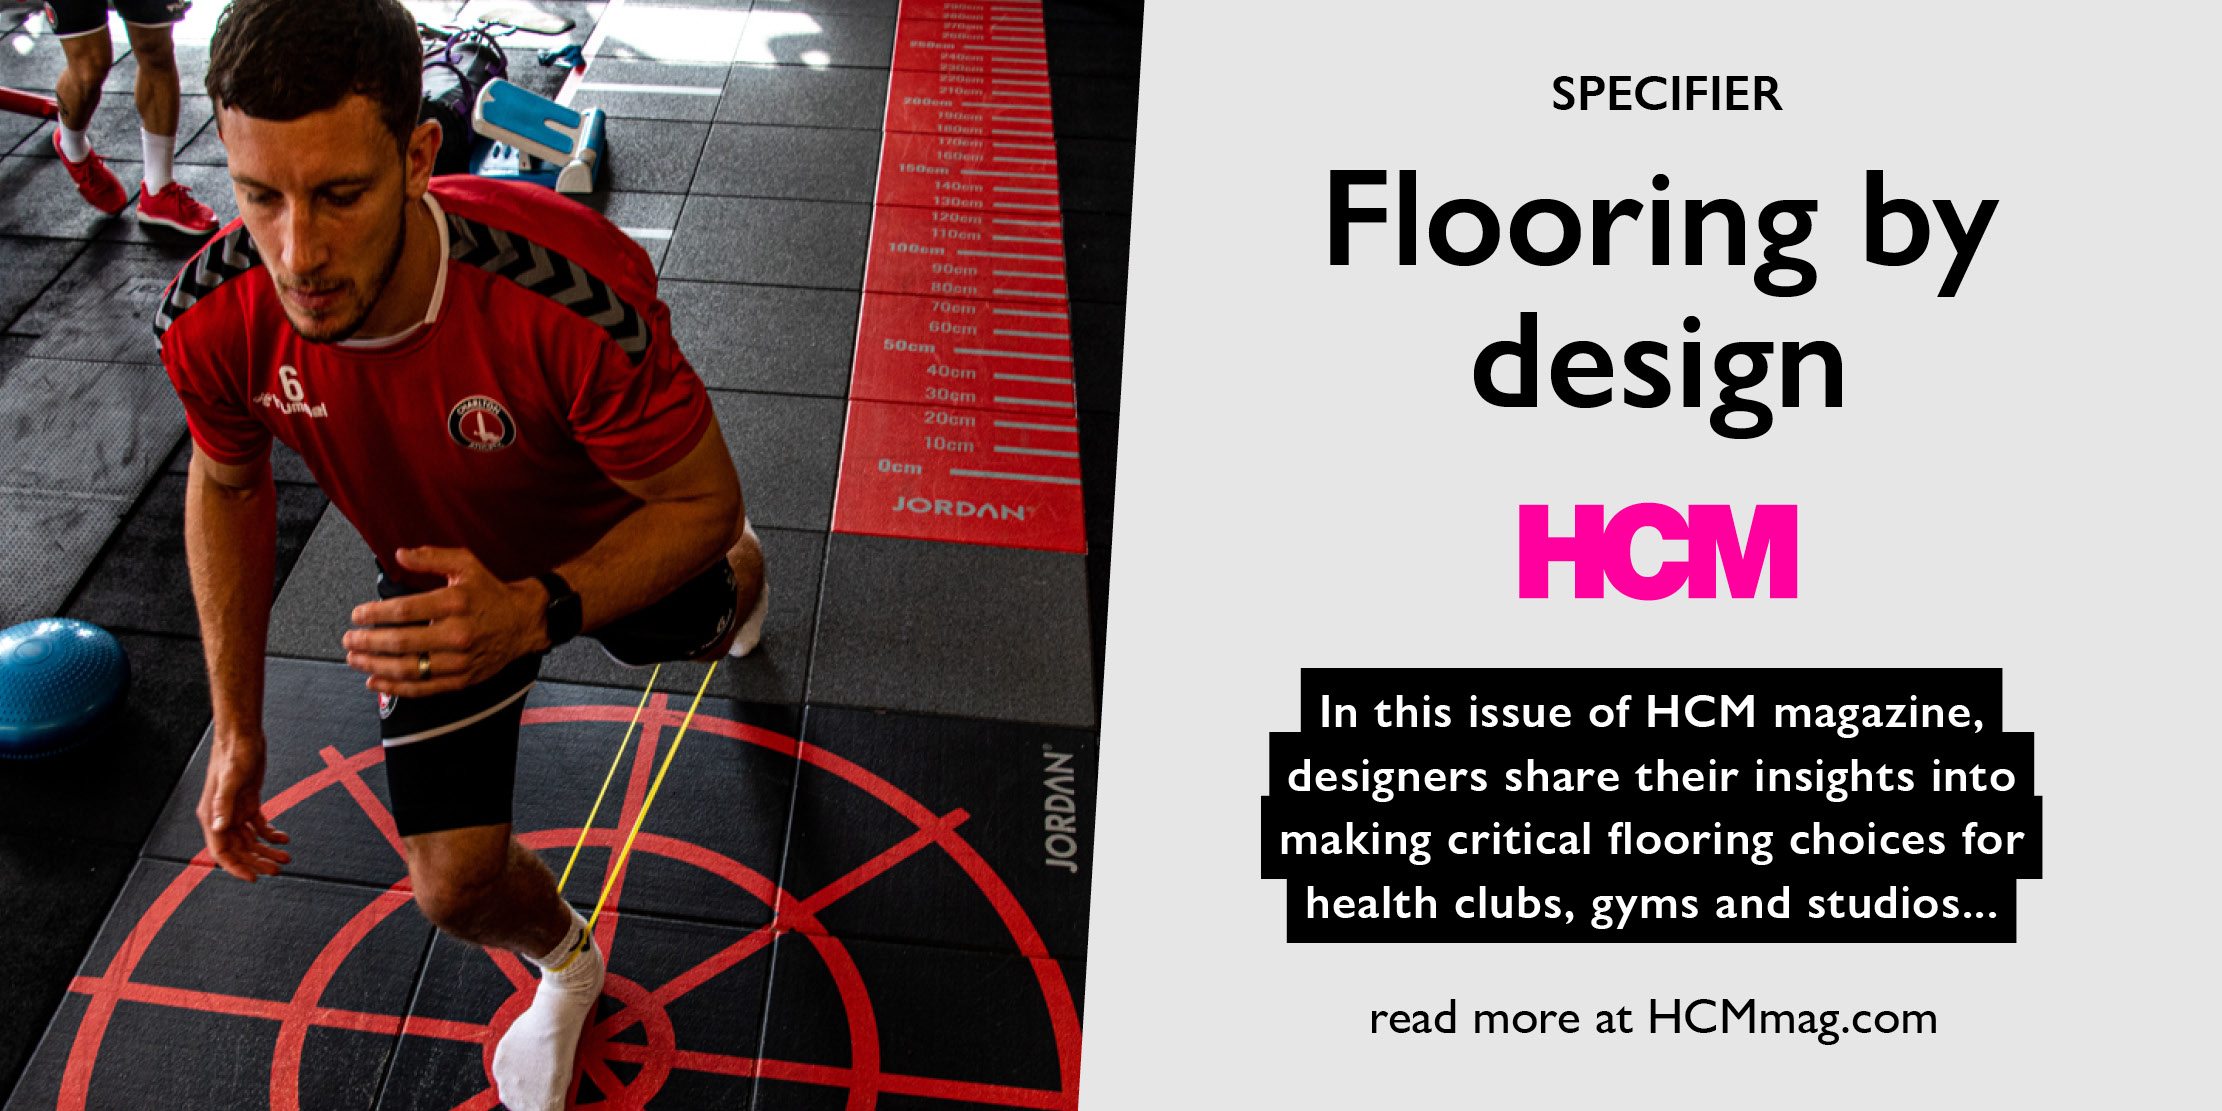 Gym flooring design | HCM specifier